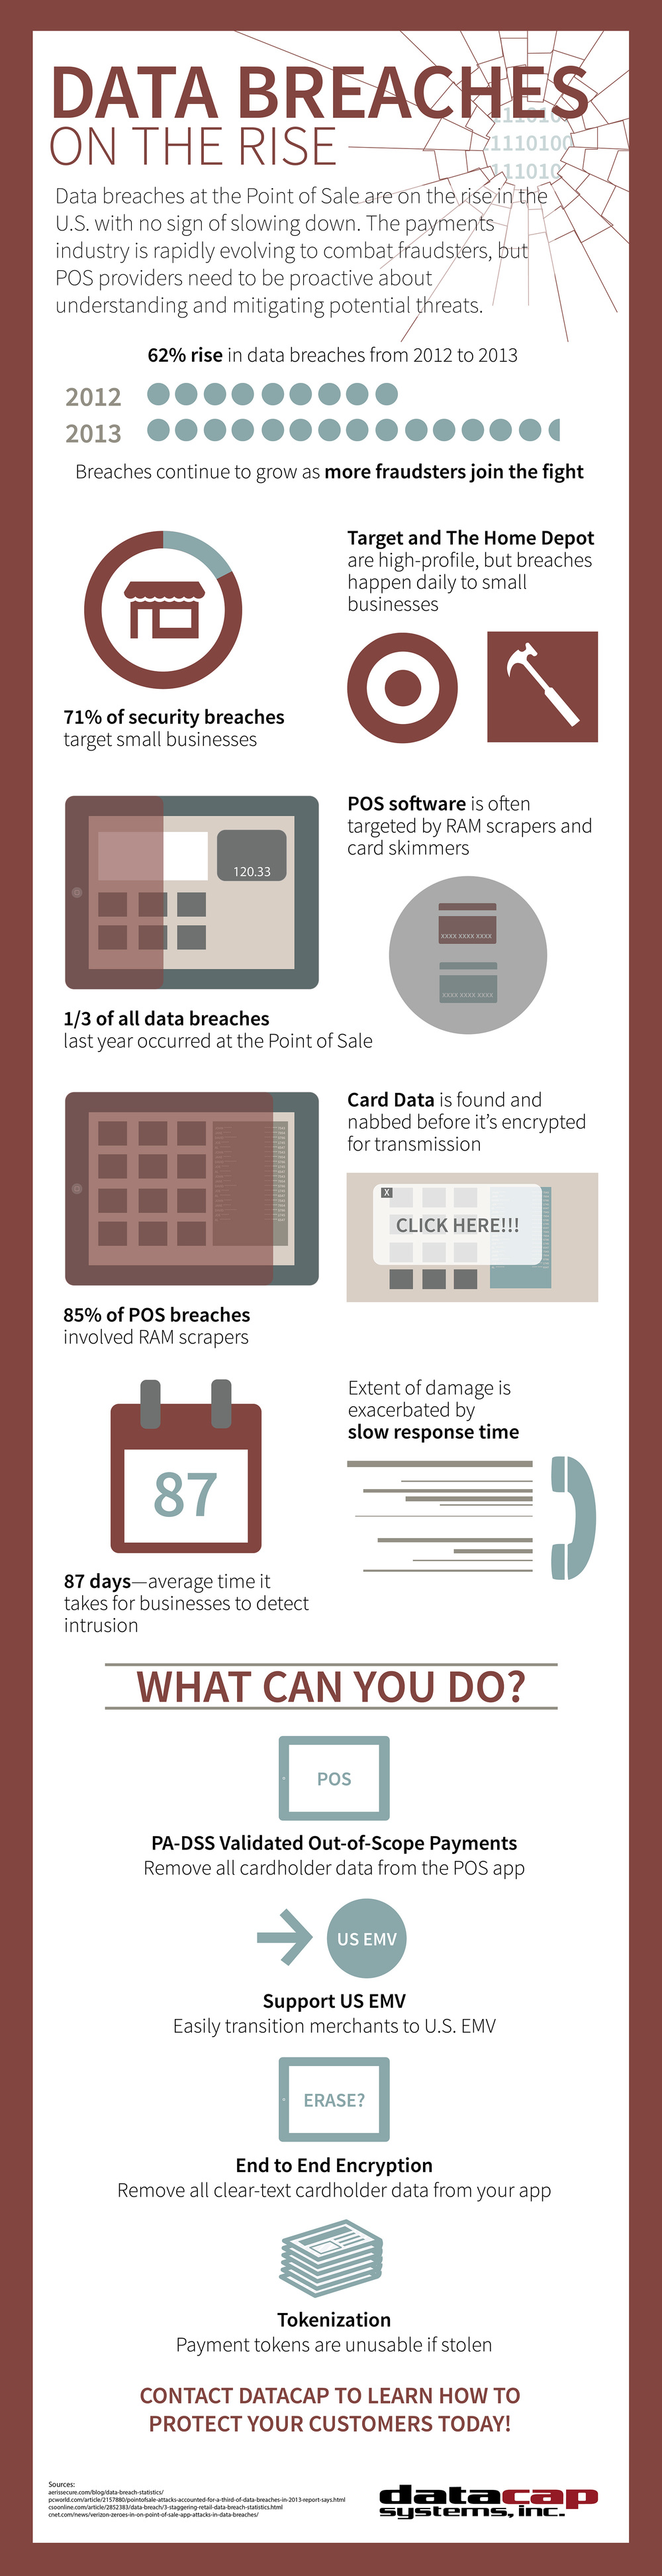  Data Breach Infographic 